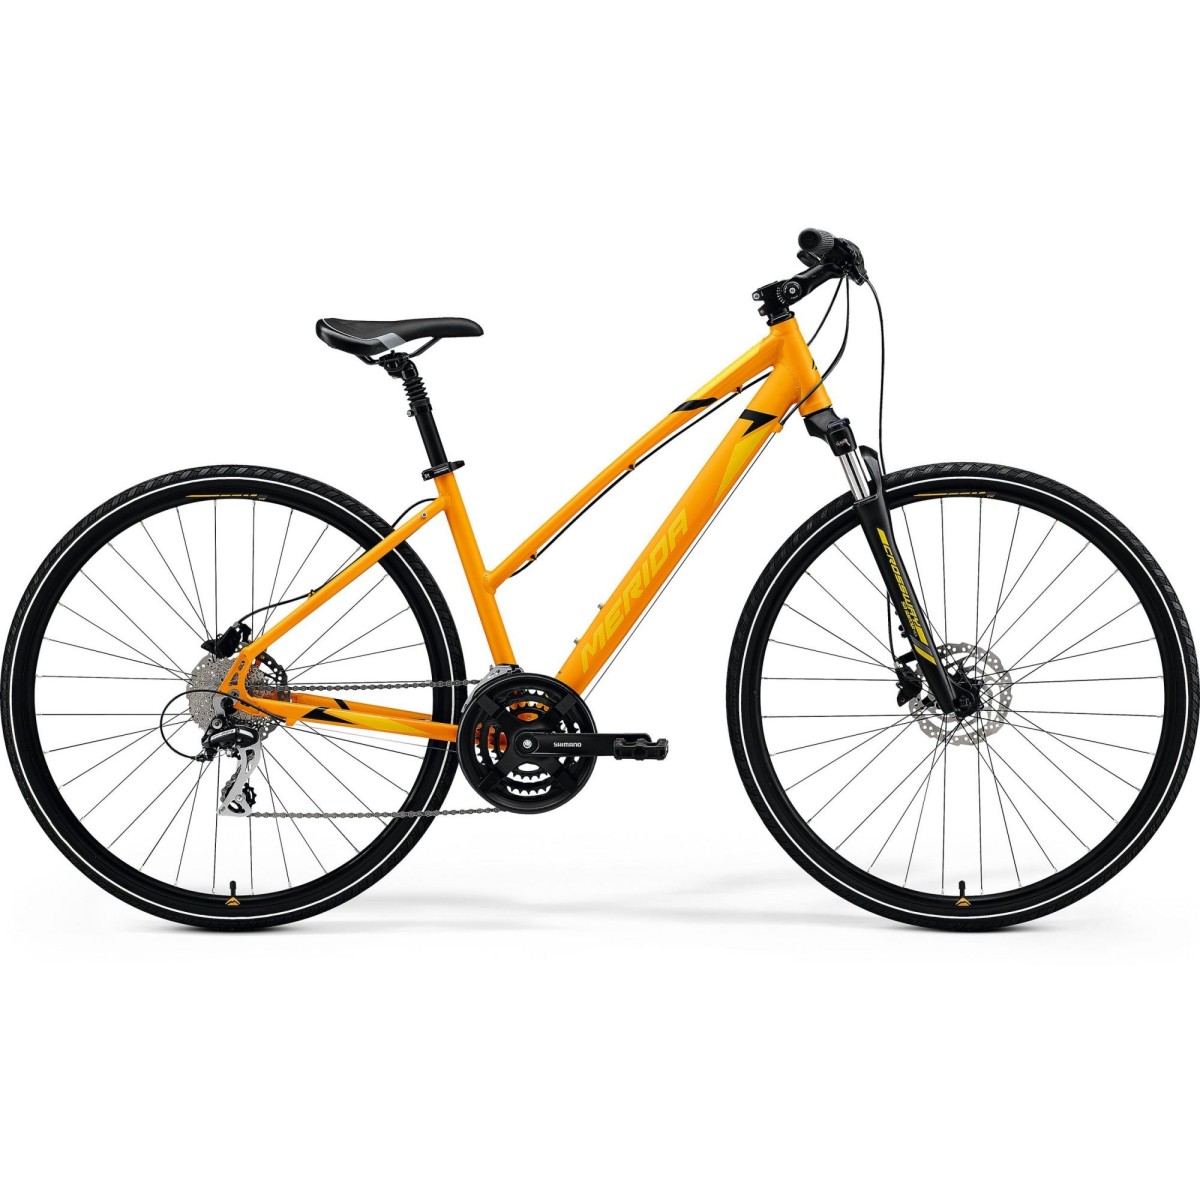 MERIDA CROSSWAY 20 LADY bicycle - orange